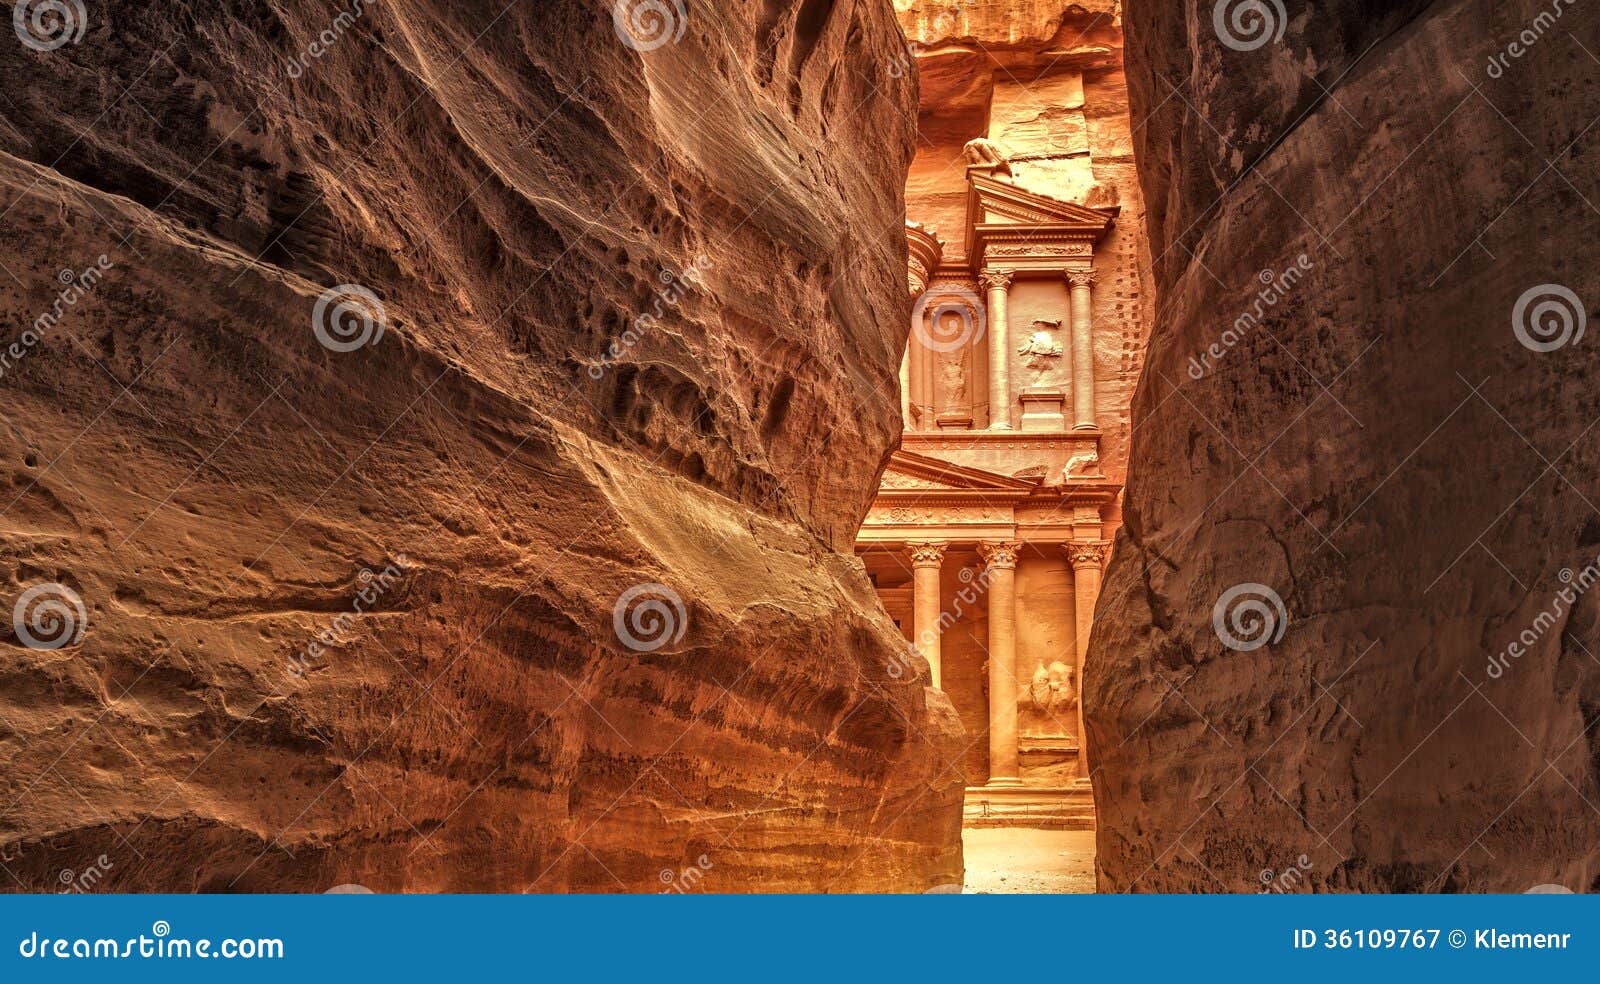 siq in ancient city of petra, jordan